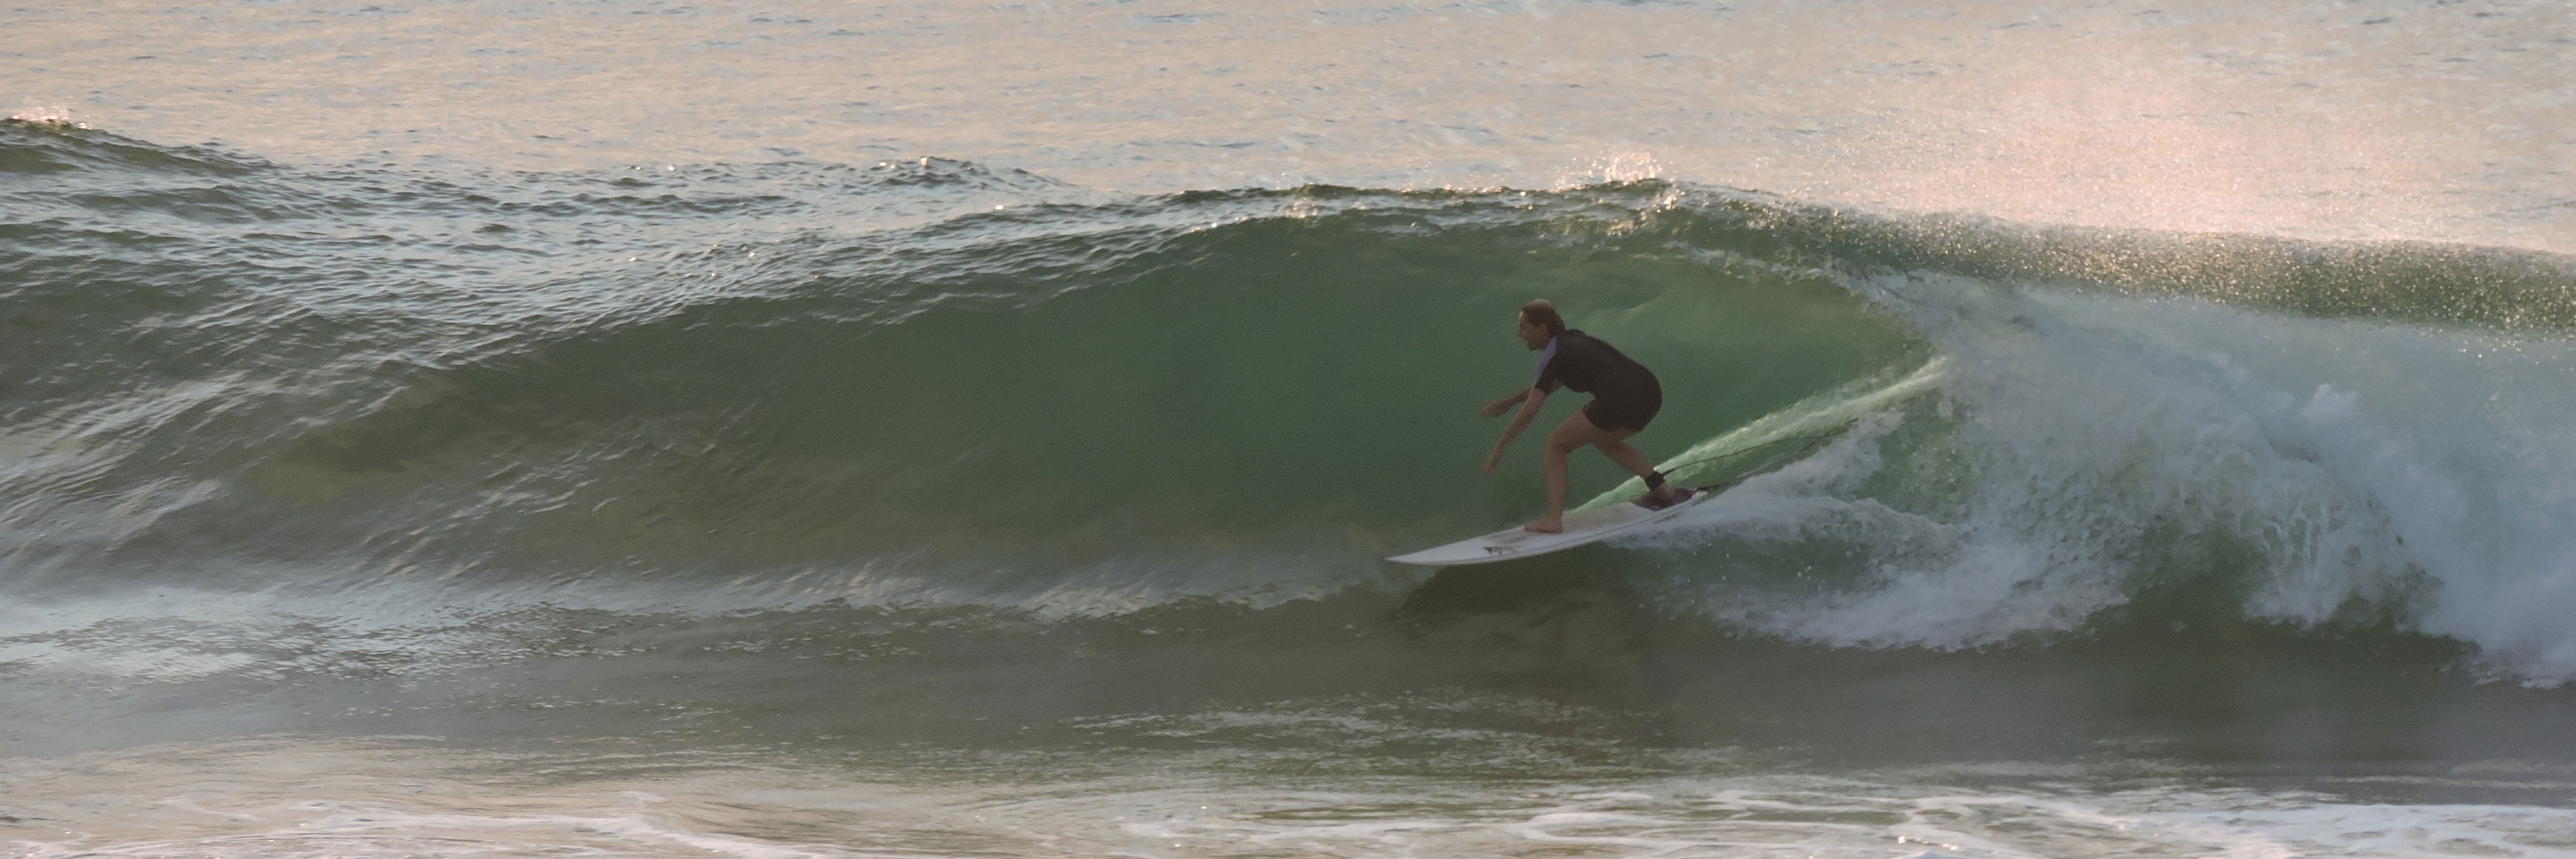 surf-bakio-2015-131